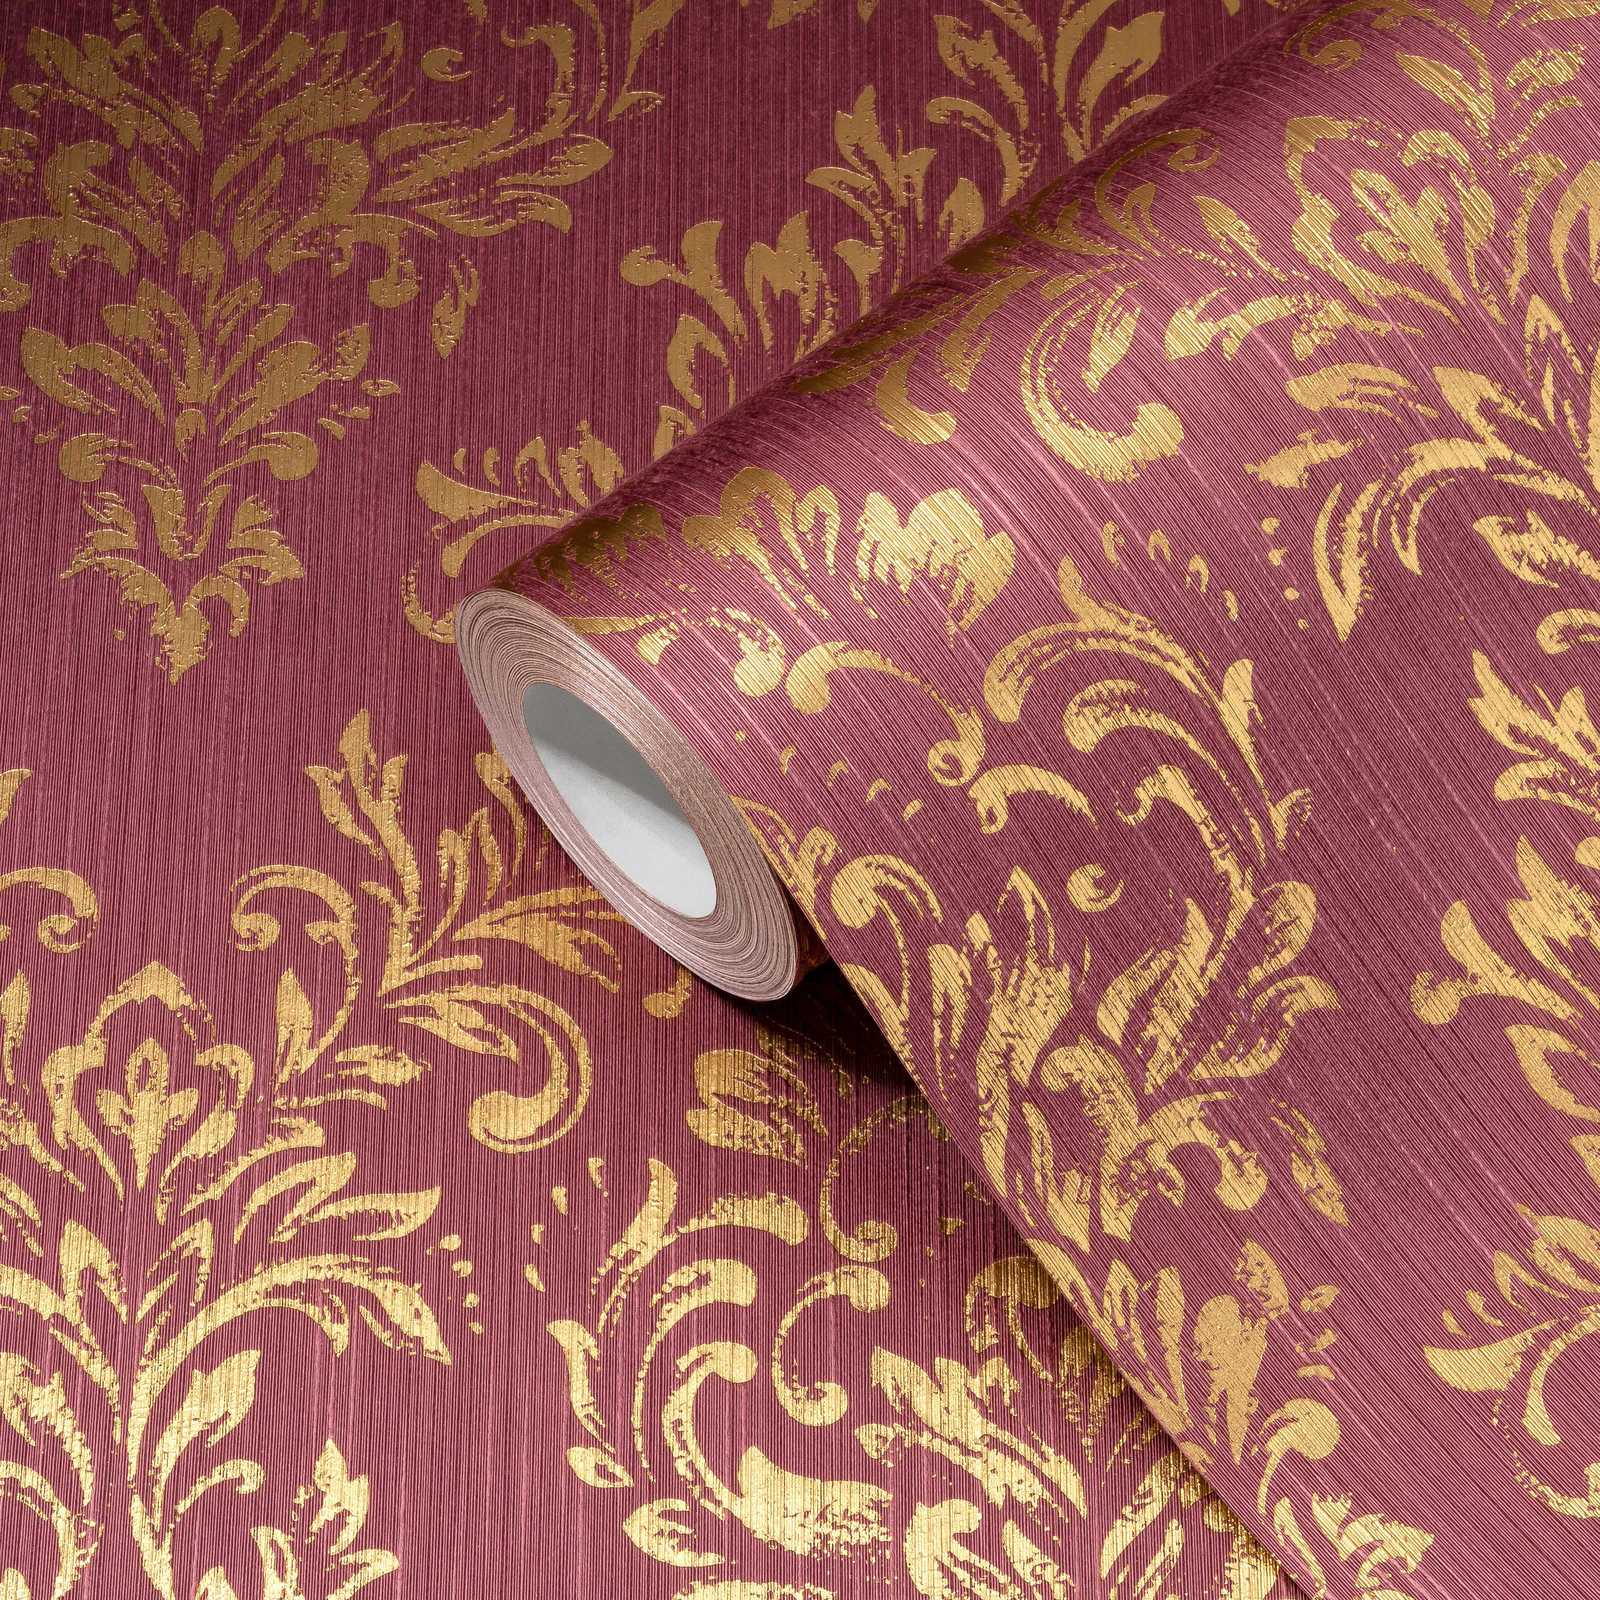             Ornament-Tapete floral mit goldenem Glitzer-Effekt – Gold, Rot
        